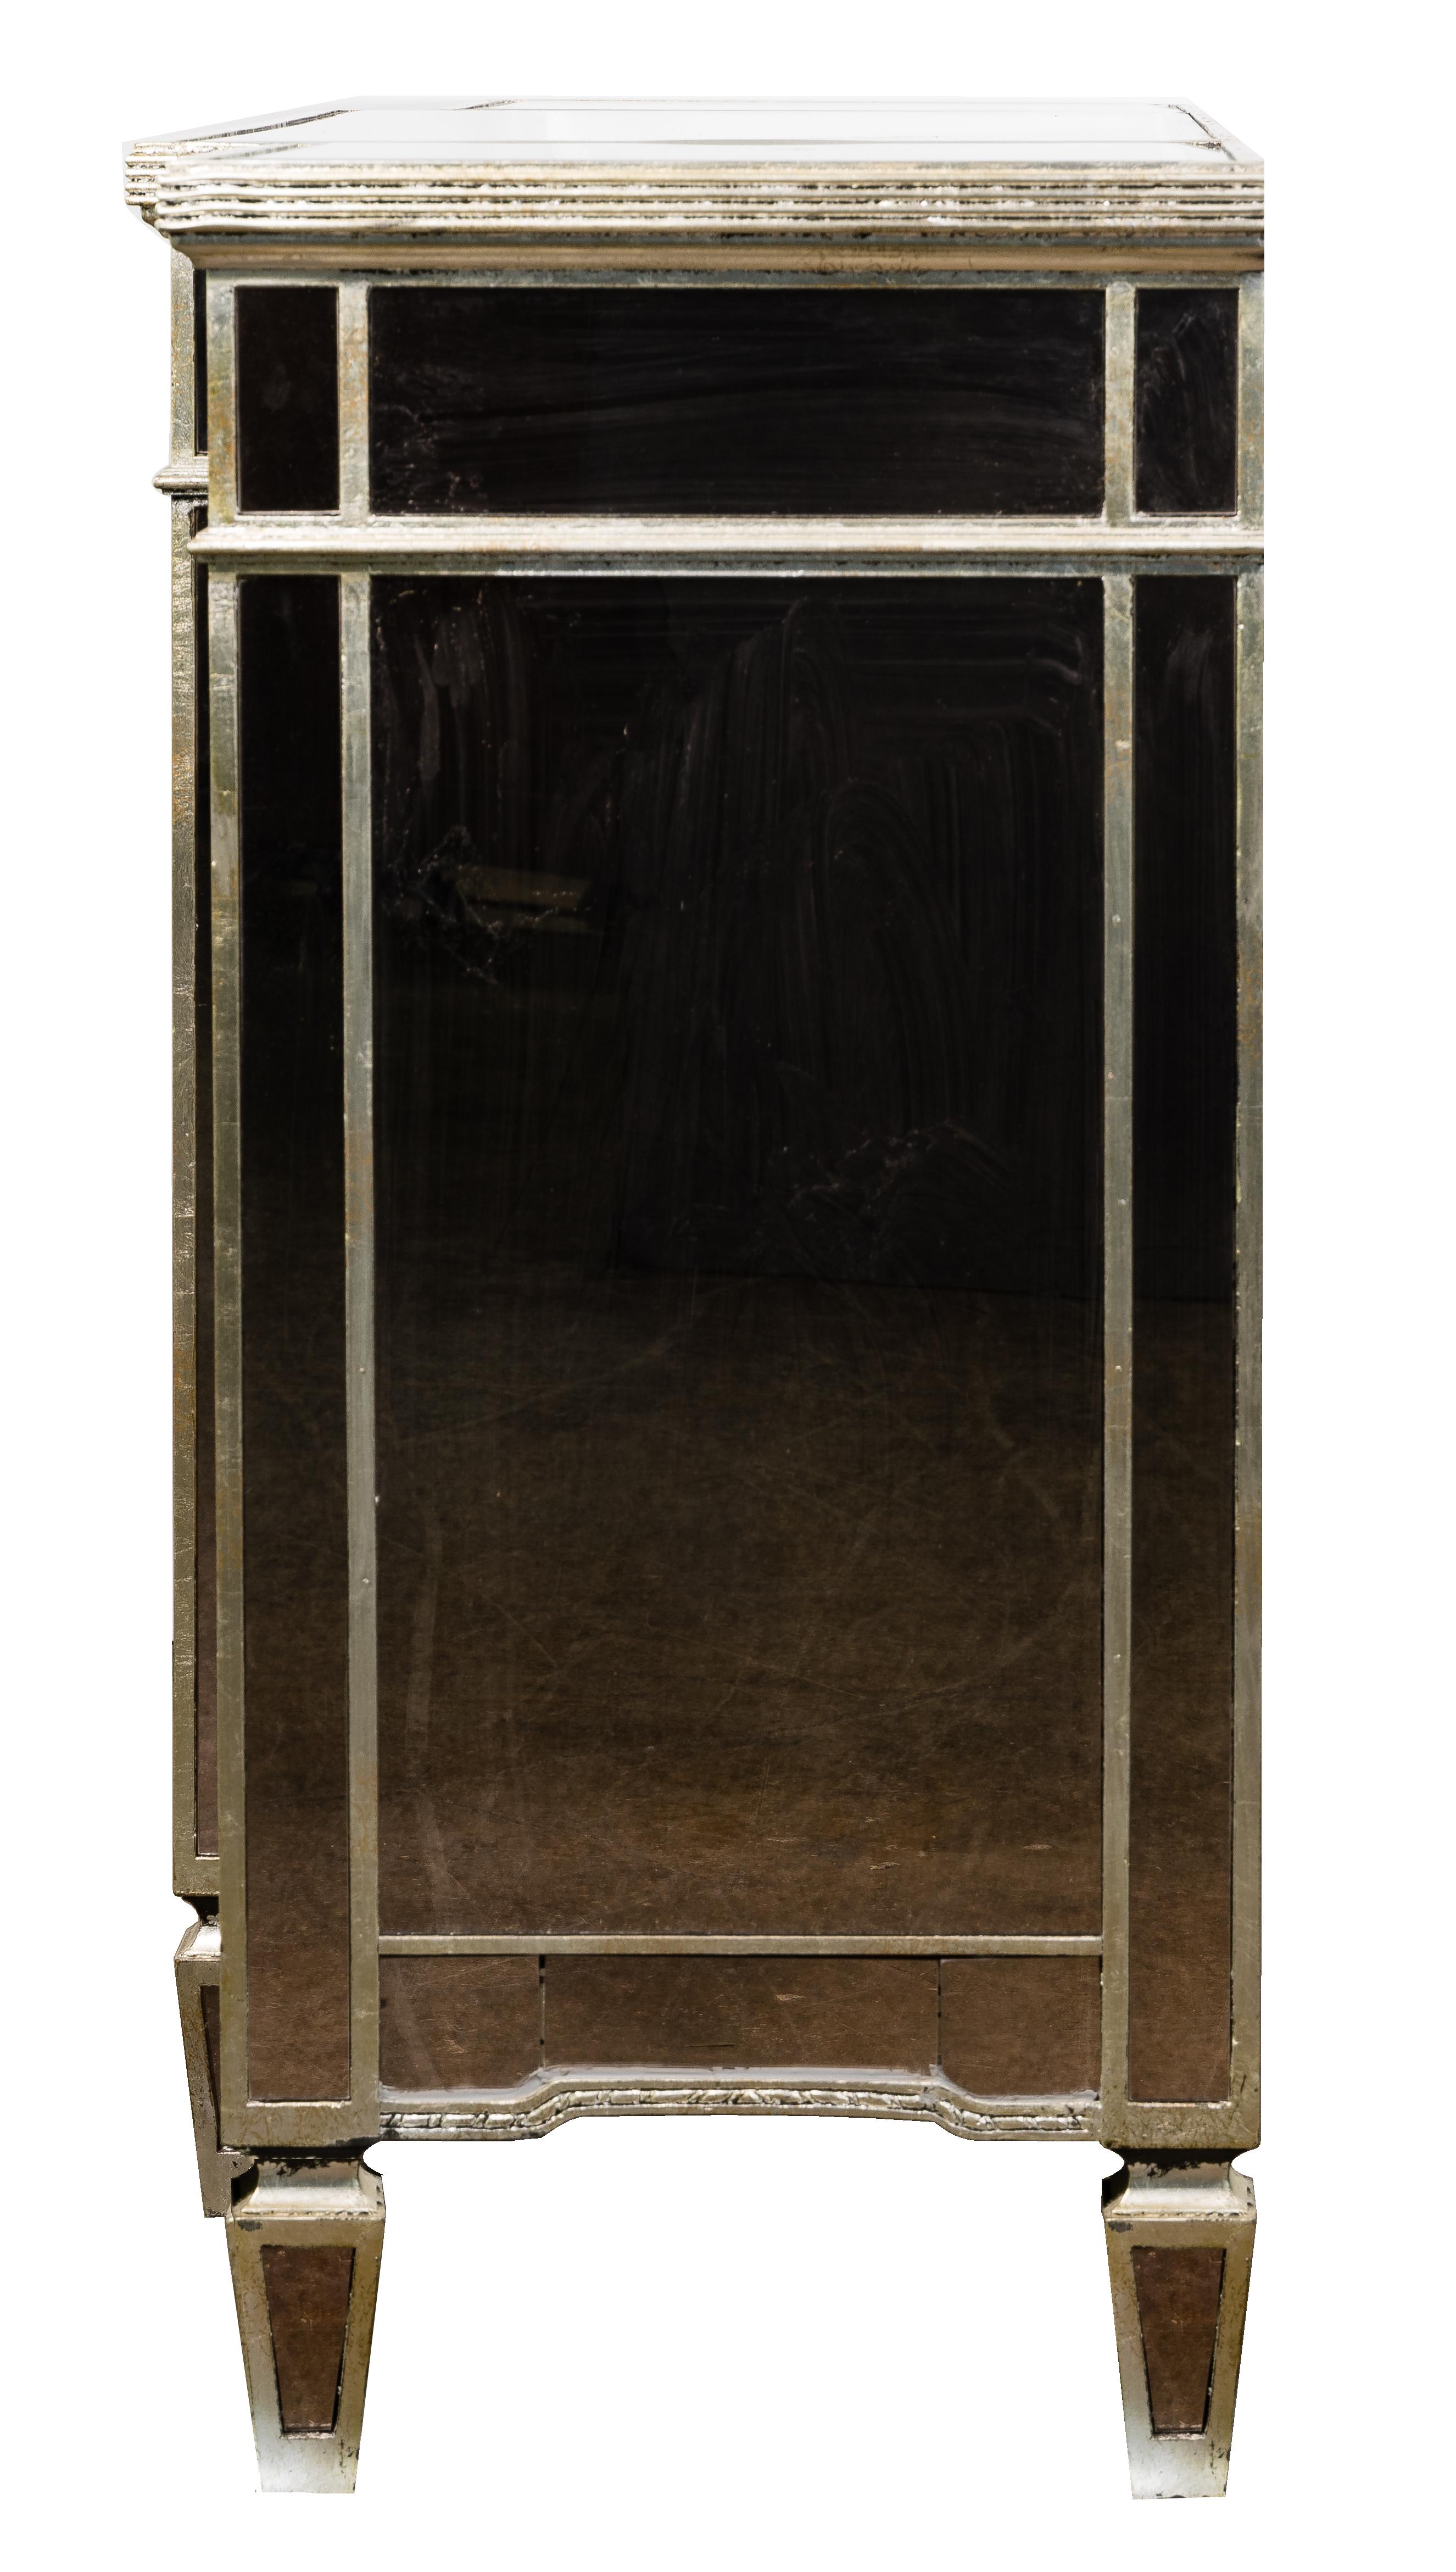 Zhong Shun Wood Art Co. Hollywood Regency Style Mirrored Sideboard